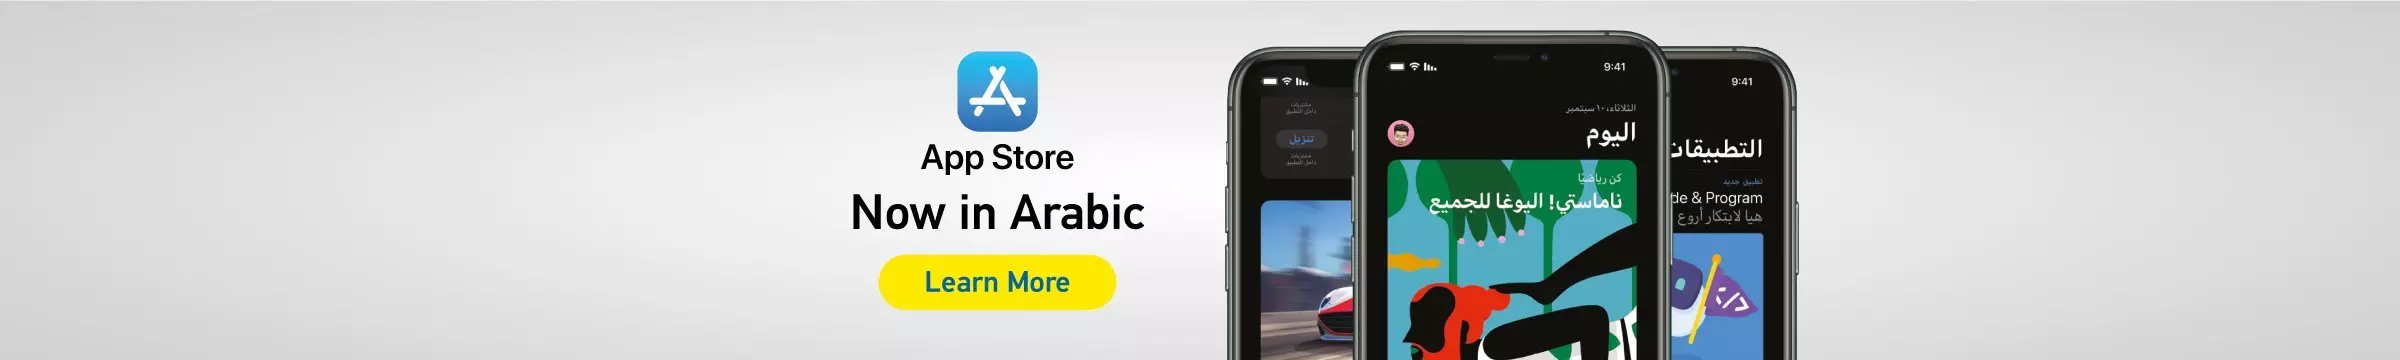 App Store Arabic